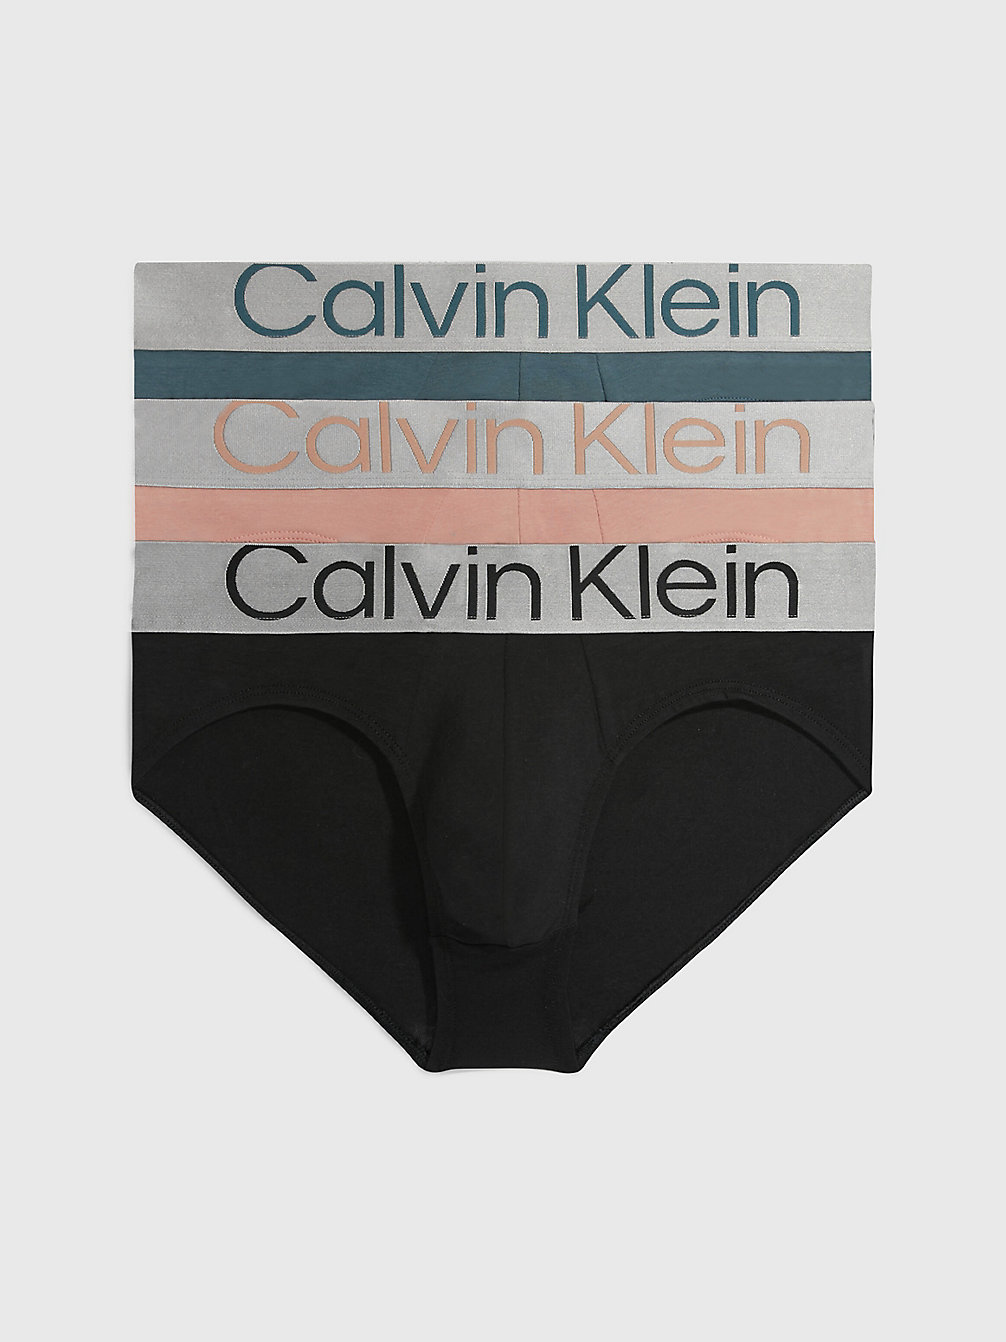 BLUE LAKE/ CLAY/ BLACK Lot De 3 Slips - Steel Cotton undefined hommes Calvin Klein